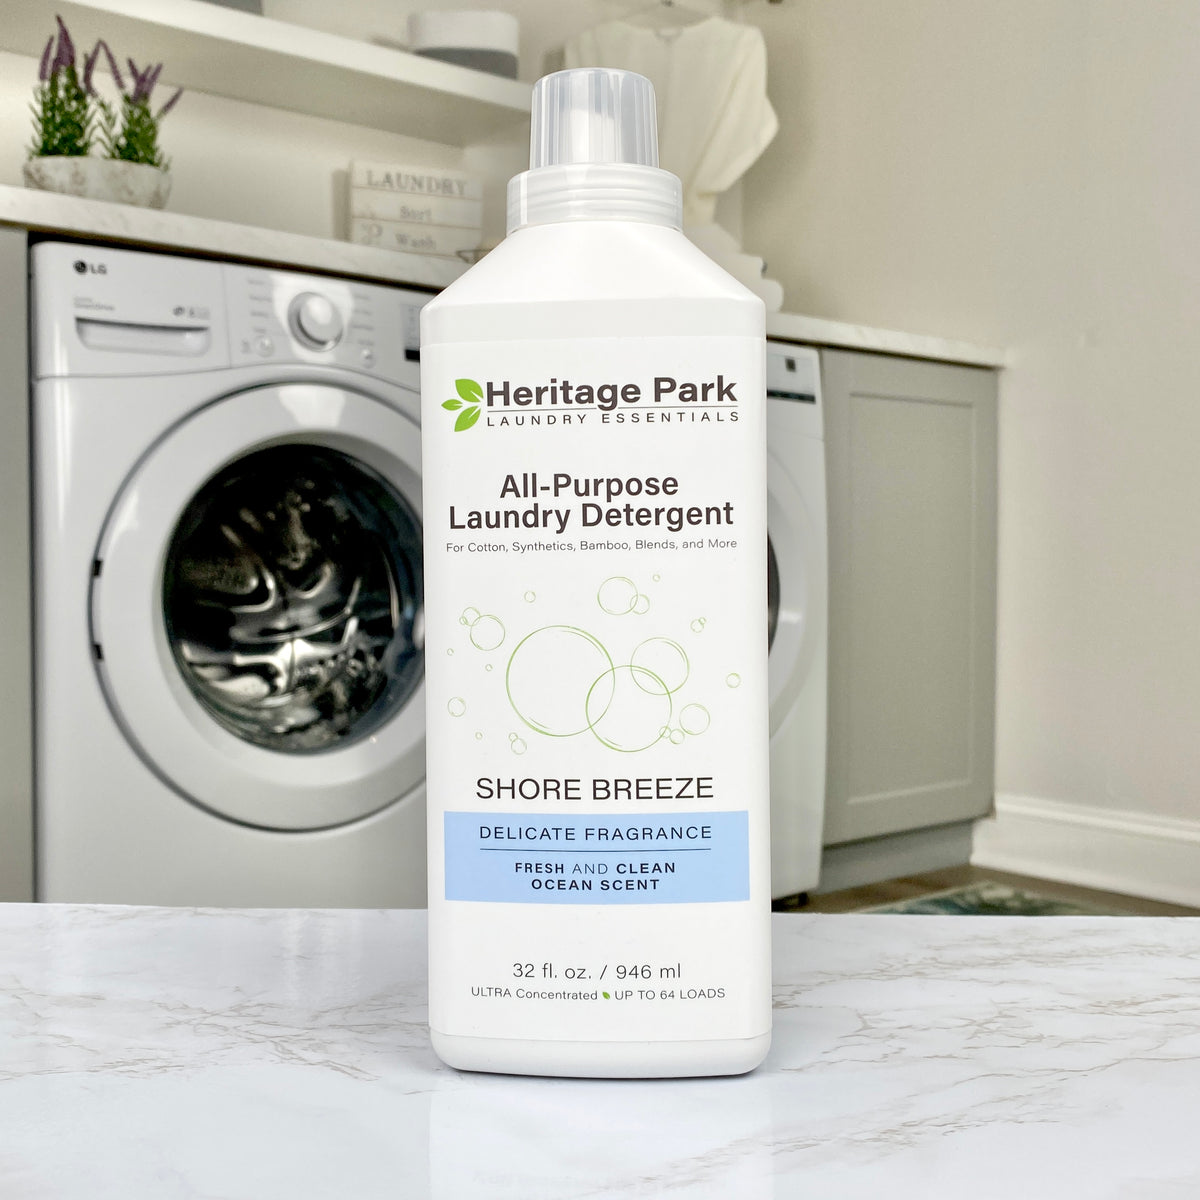 Heritage Park All-Purpose Laundry Detergent - Shore Breeze